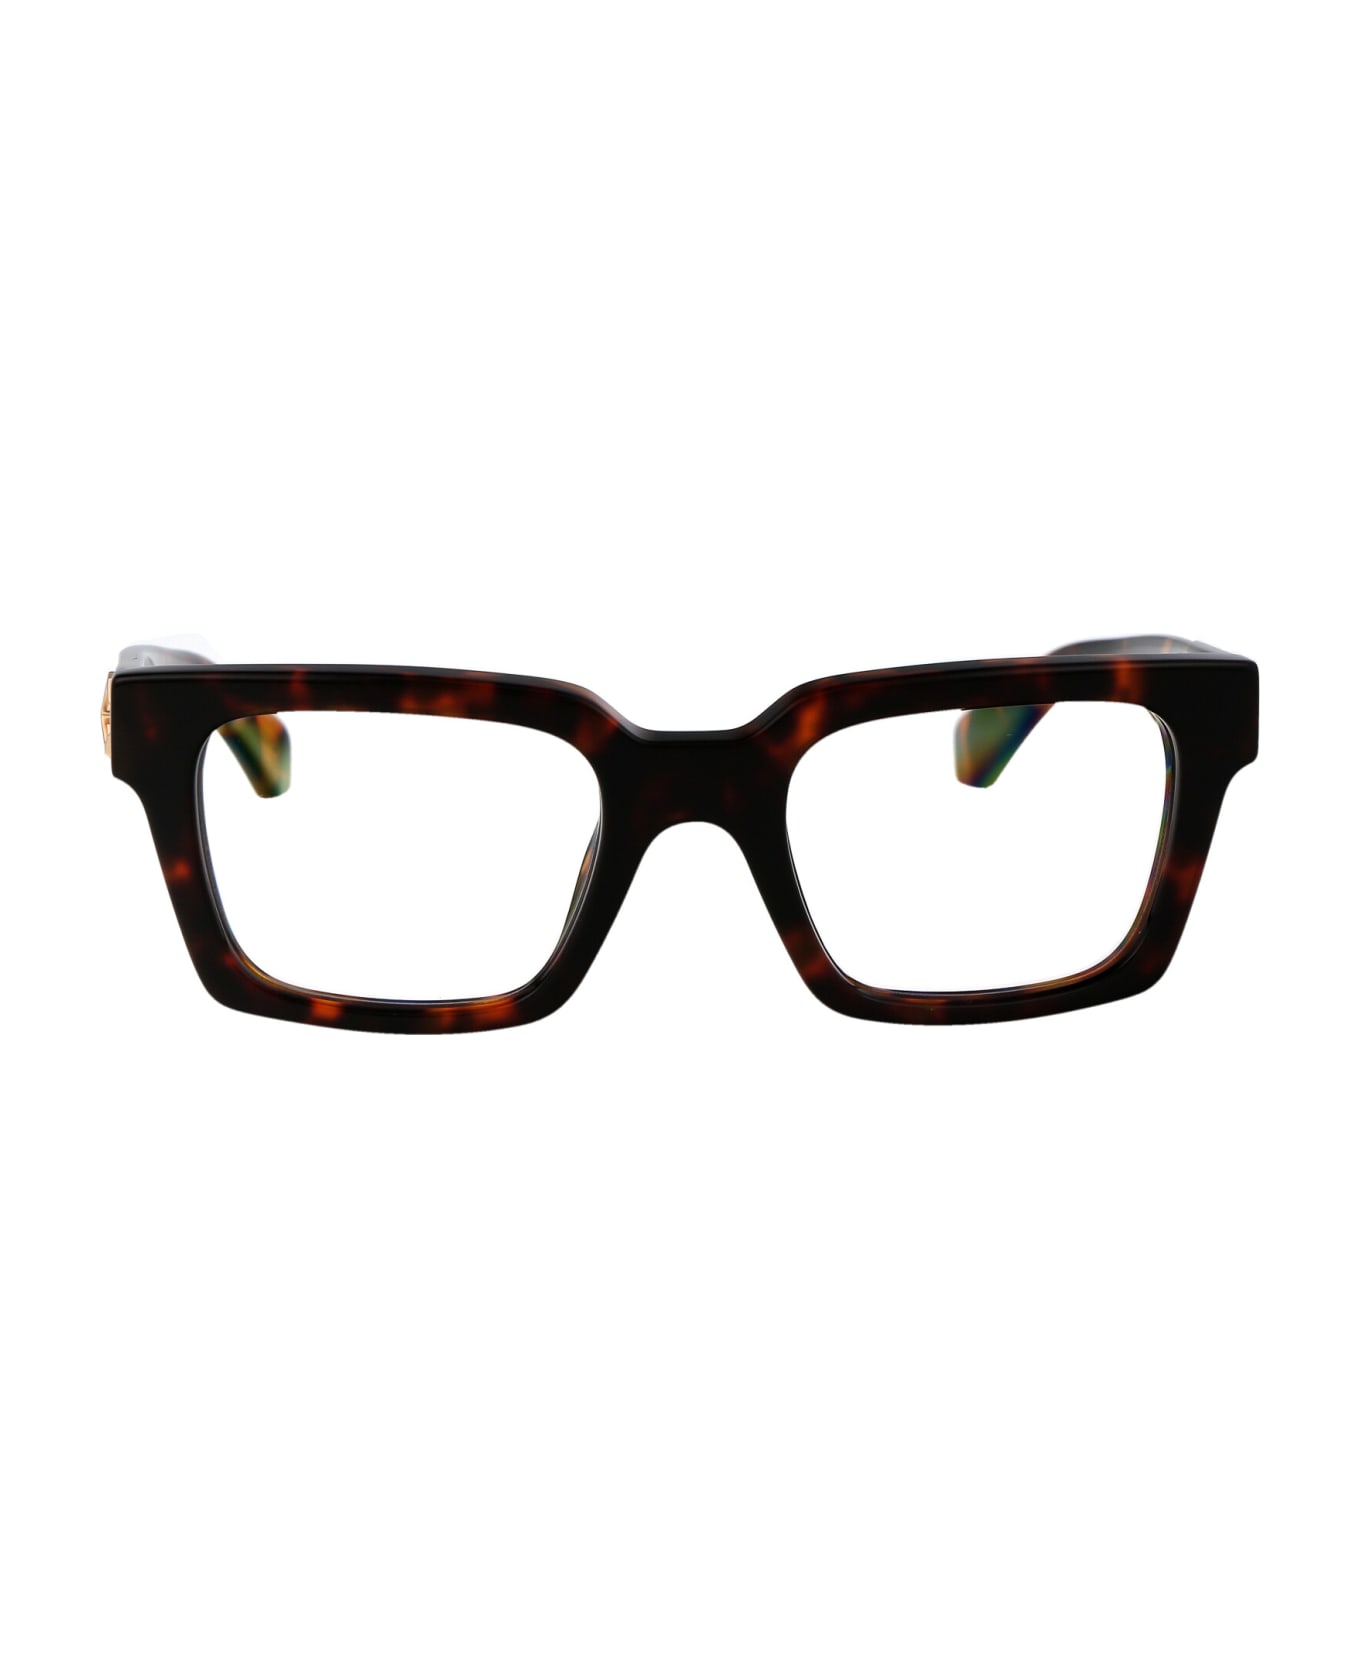 Off-White Optical Style 72 Glasses - 6000 HAVANA アイウェア